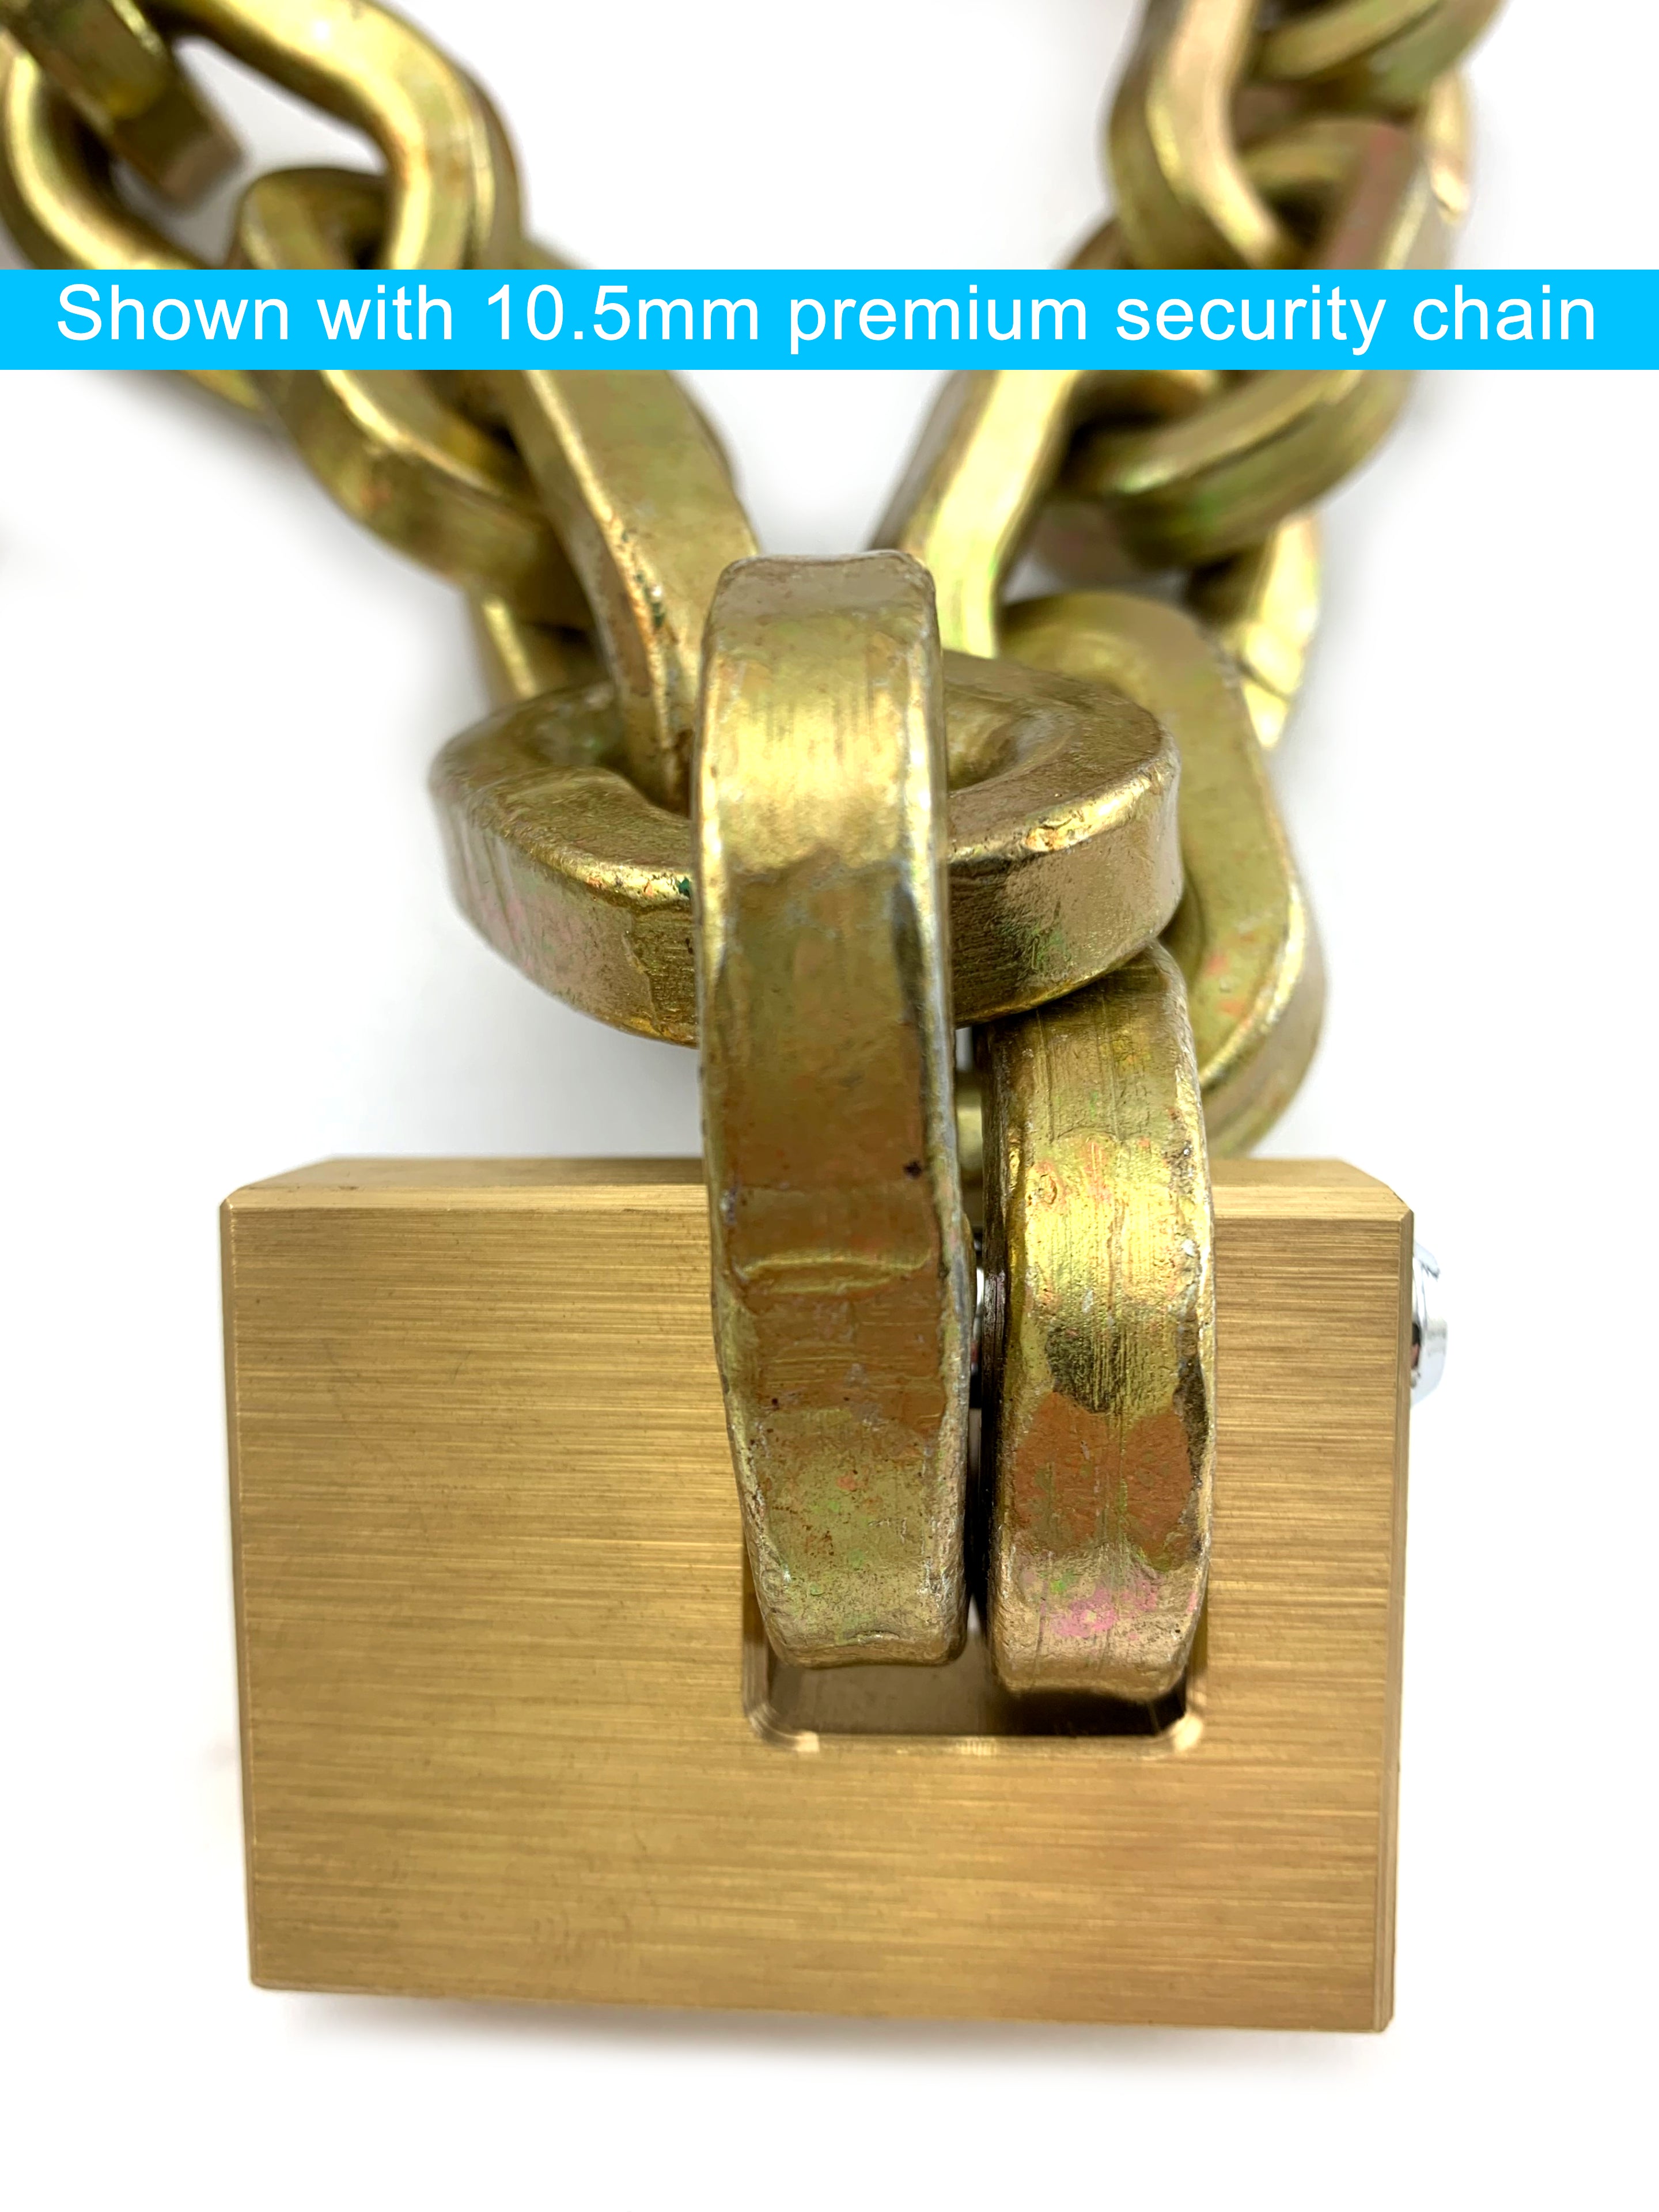 High-Security Monoblock Brass Padlock with premium security chain size 10.5mm. Australia.